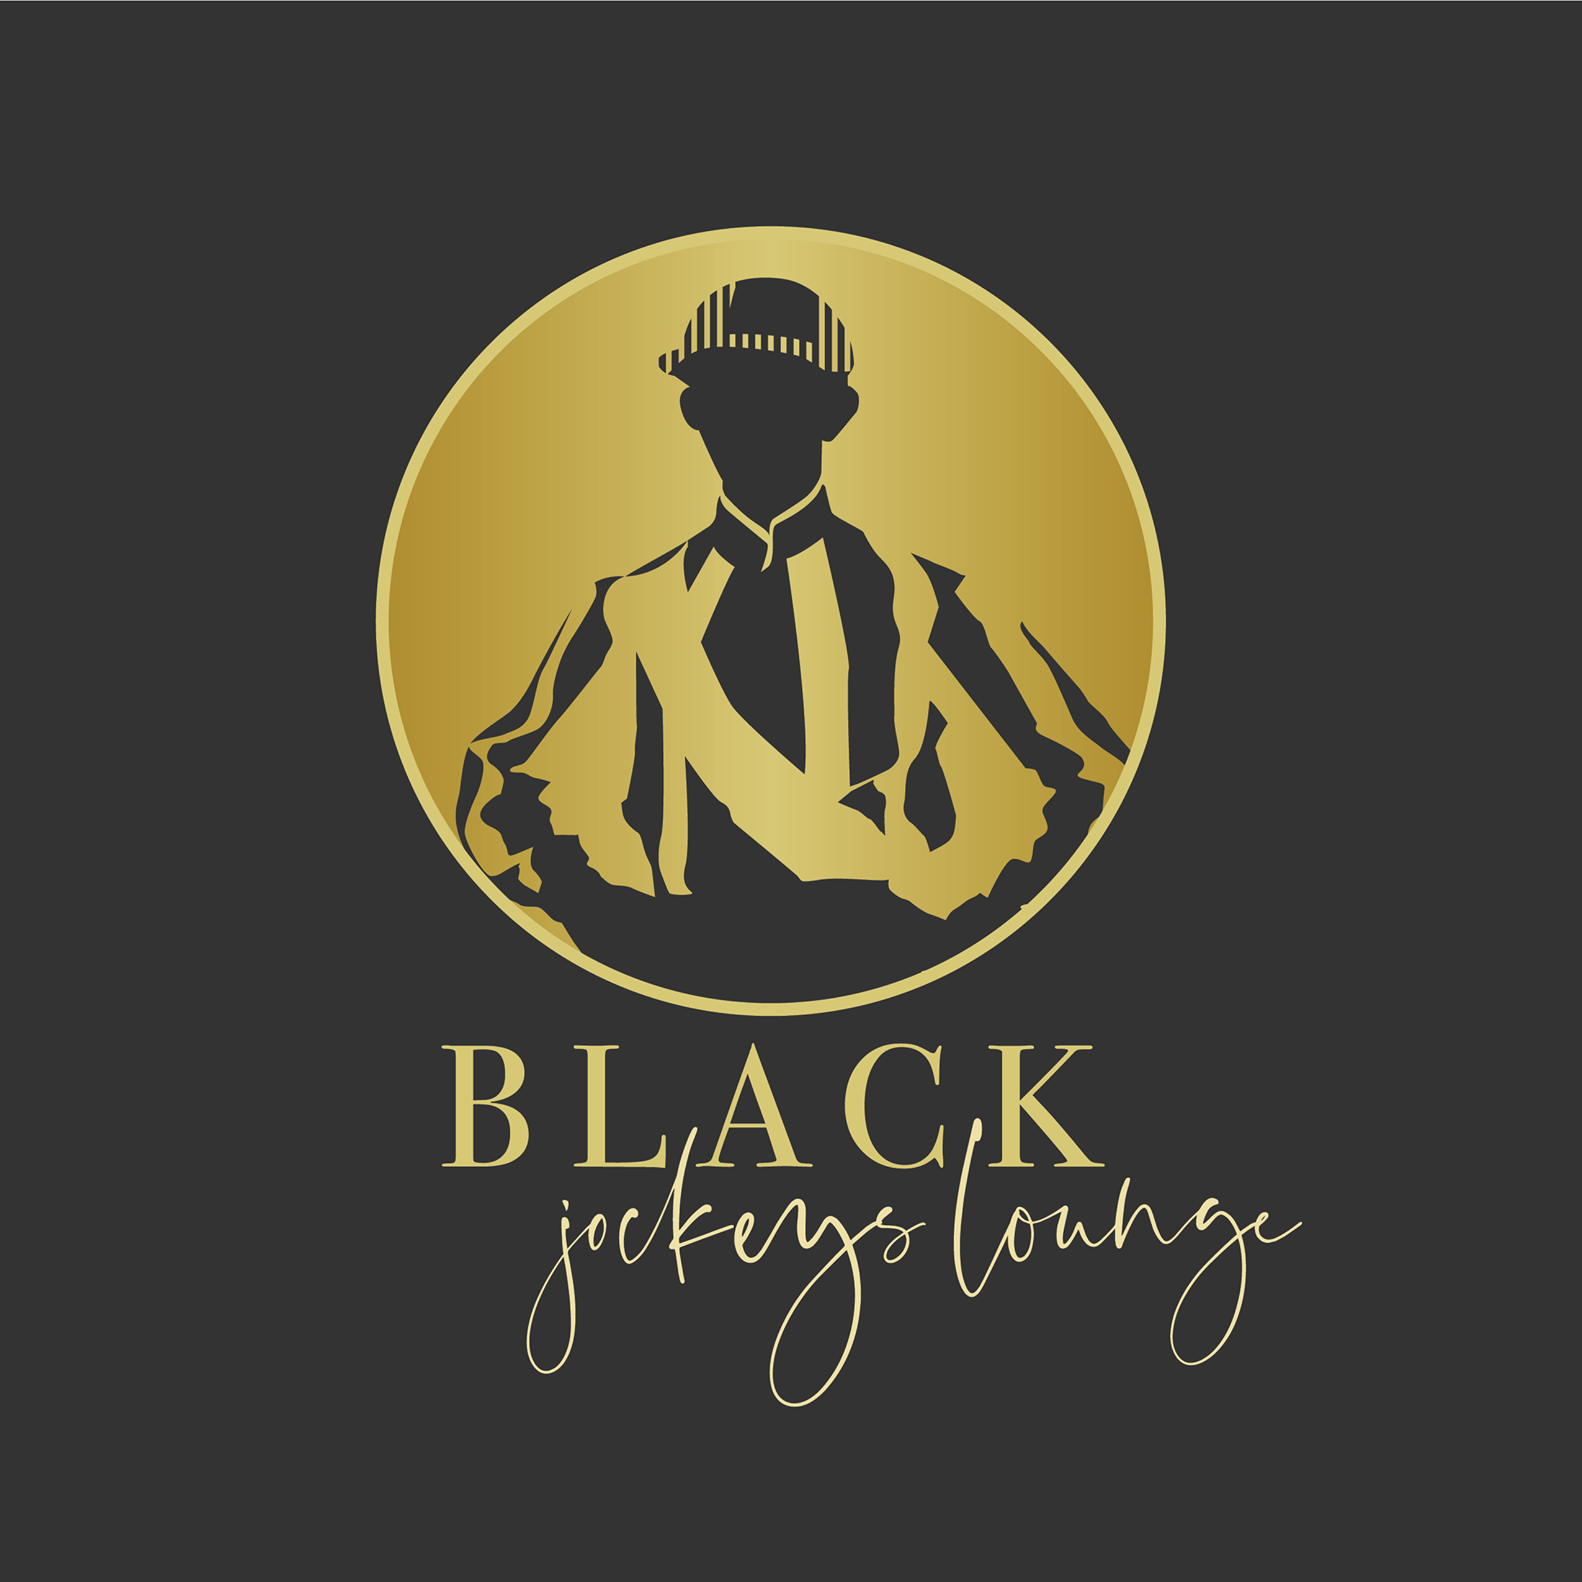 Black Jockeys Lounge